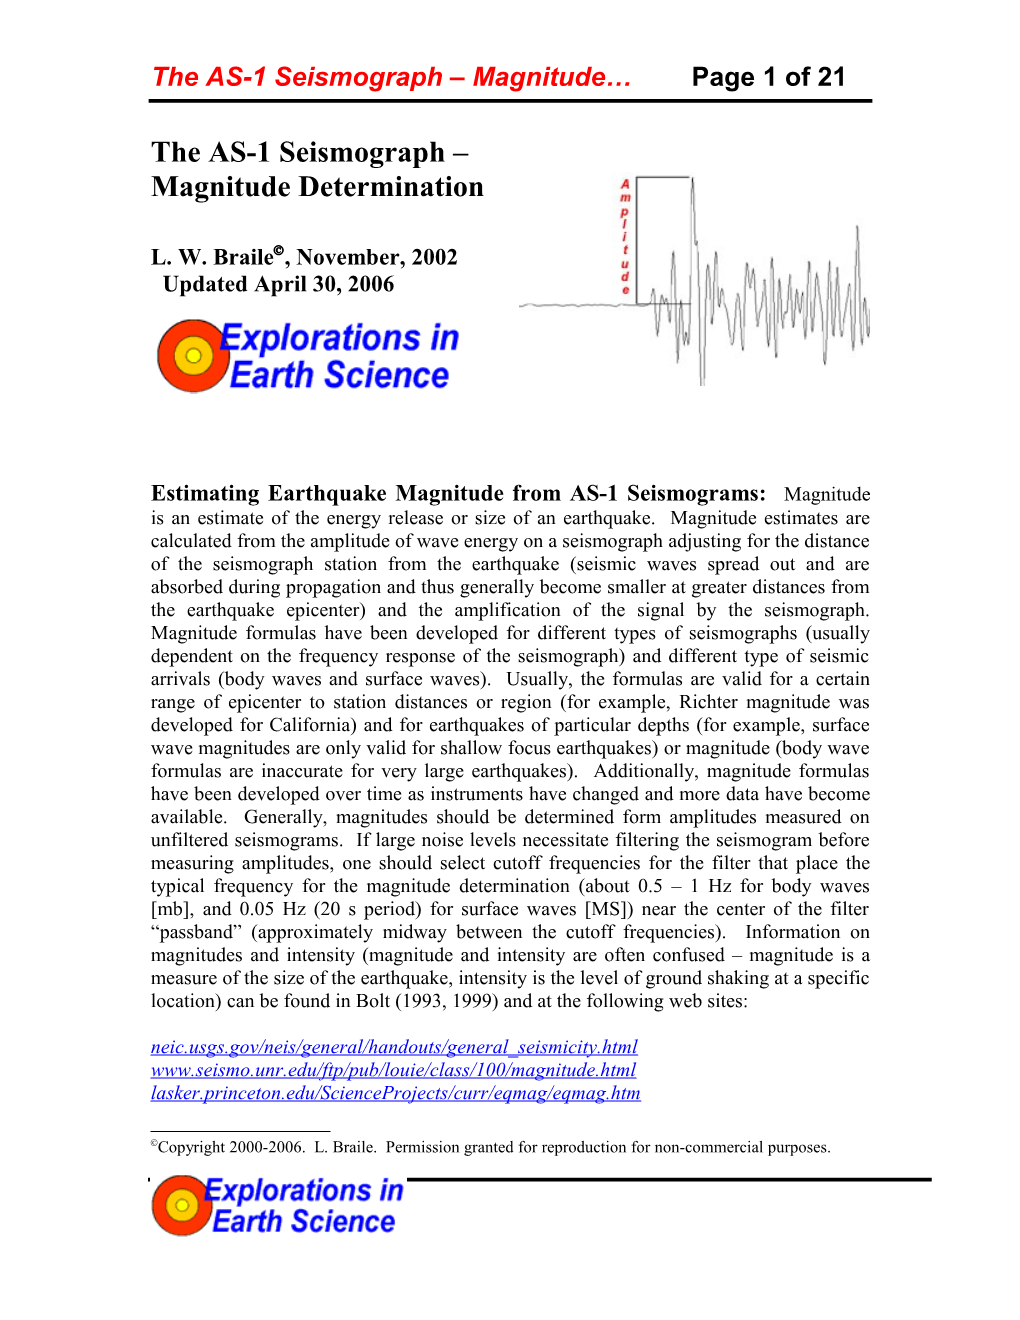 The AS-1 Seismograph Magnitude Determination and Calibration